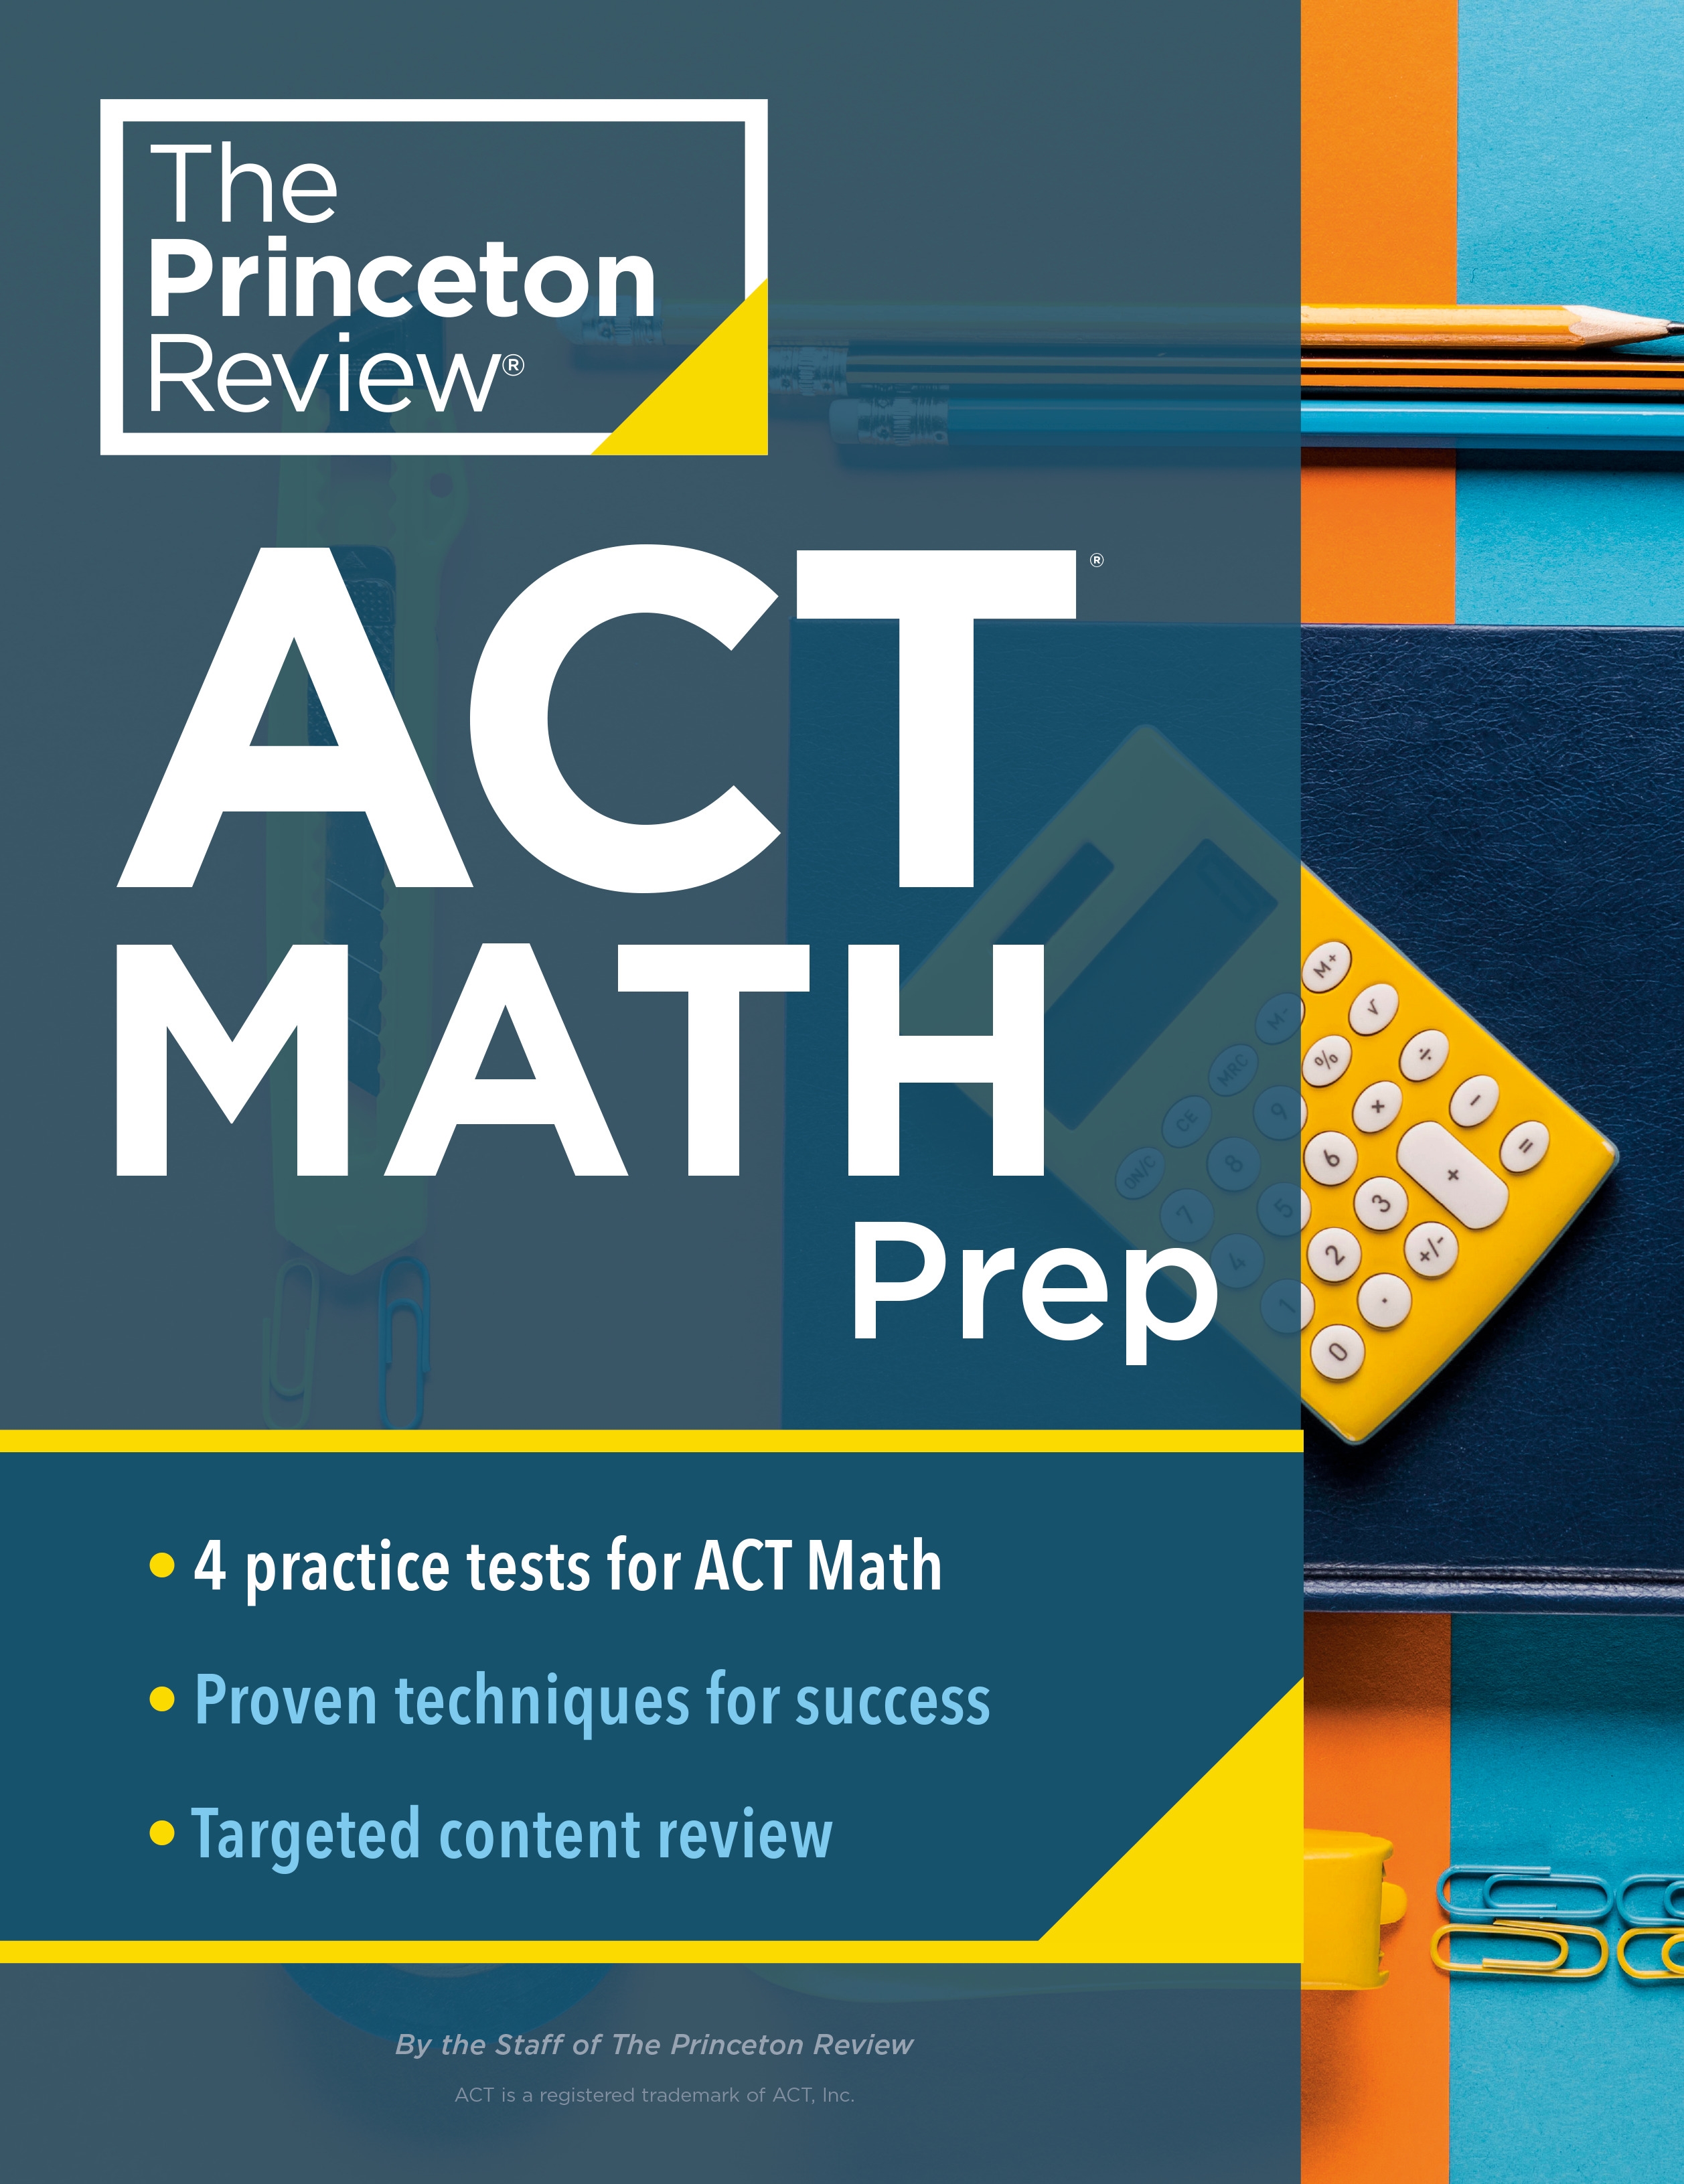 act math practice